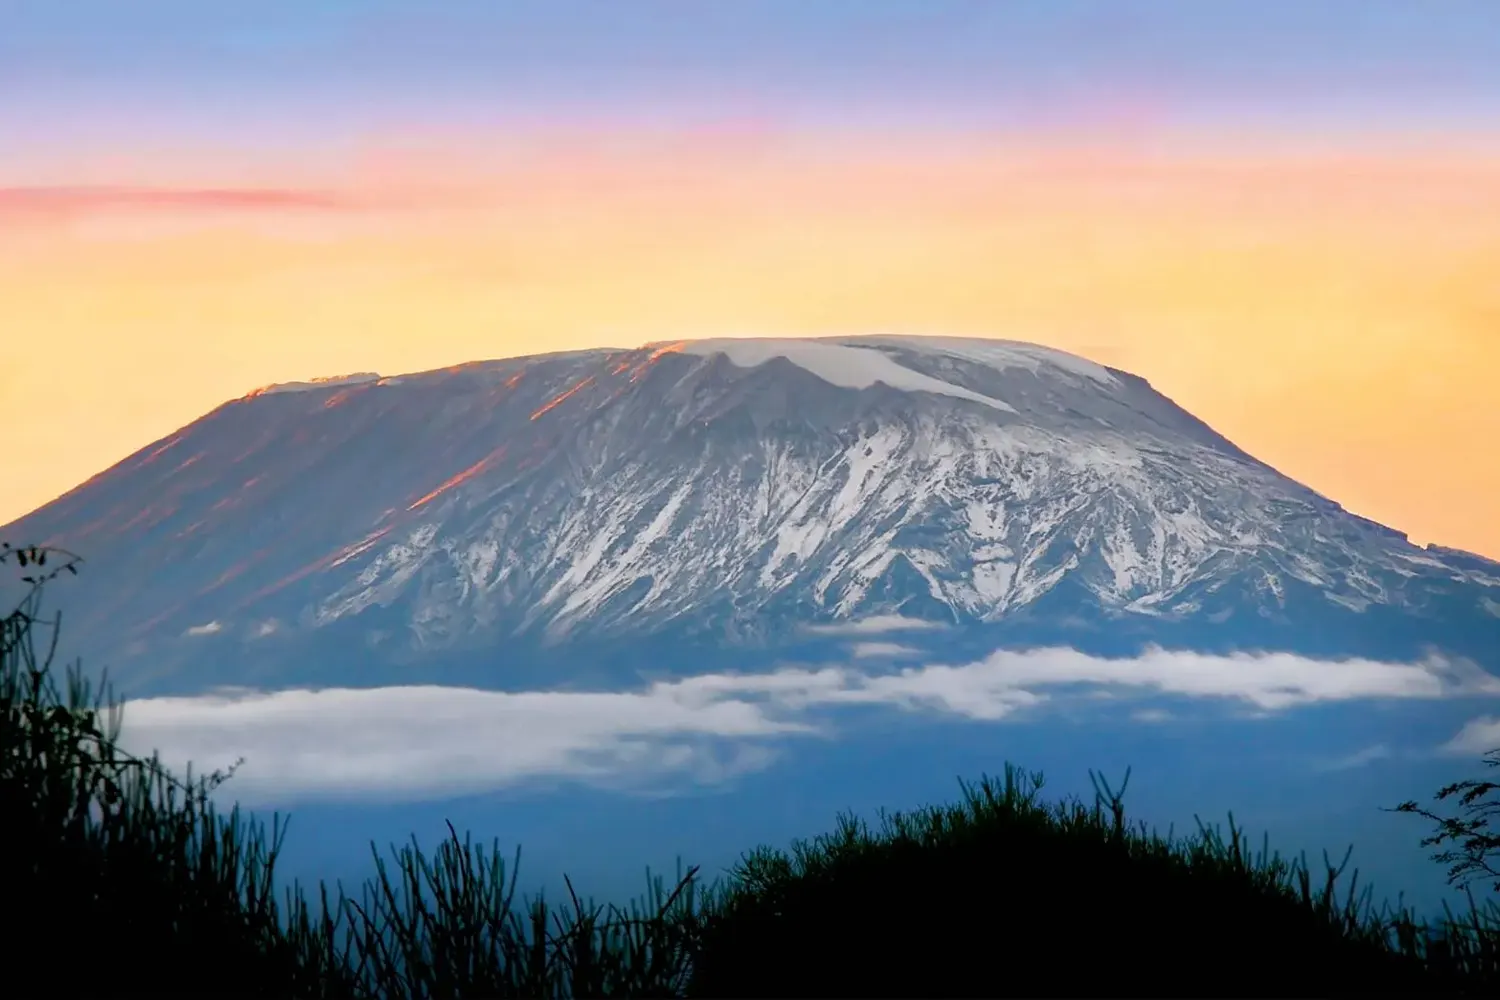 Mount Kilimanjaro facts